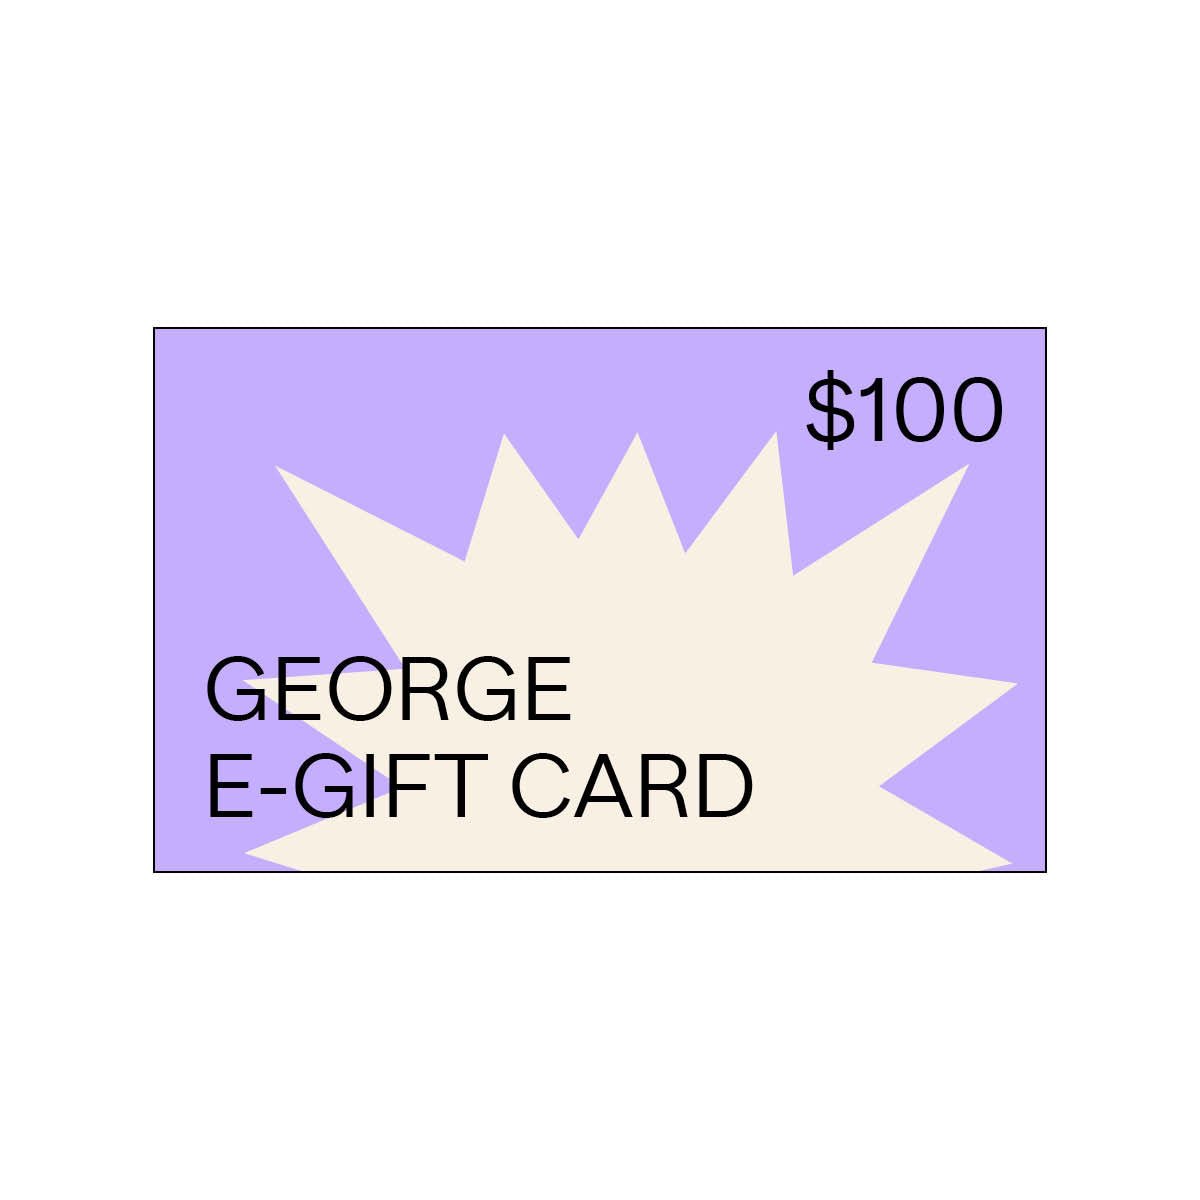 E-gift card - George Haircare